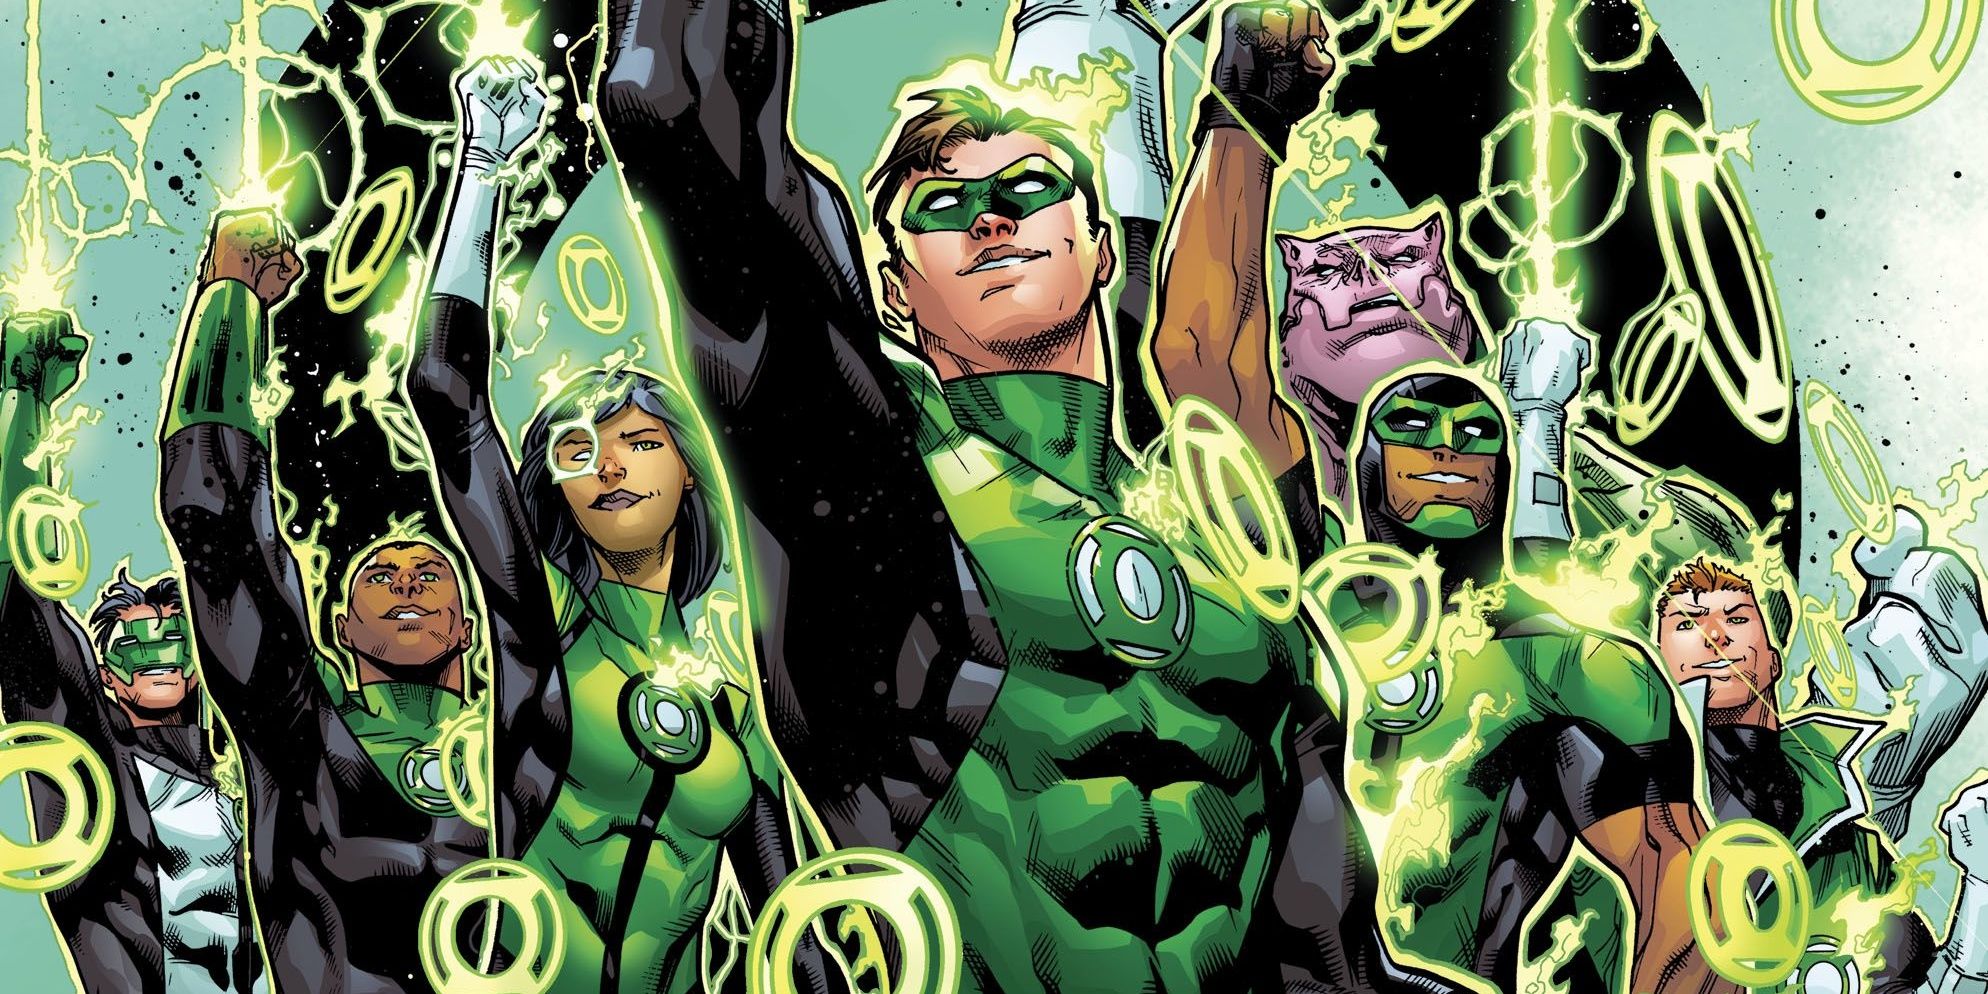 Green Lanterns Kyle Rayner, John Stewart, Jessica Cruz, Hal Jordan, Simon Baz, Kilowog and Guy Gardner from DC Comics